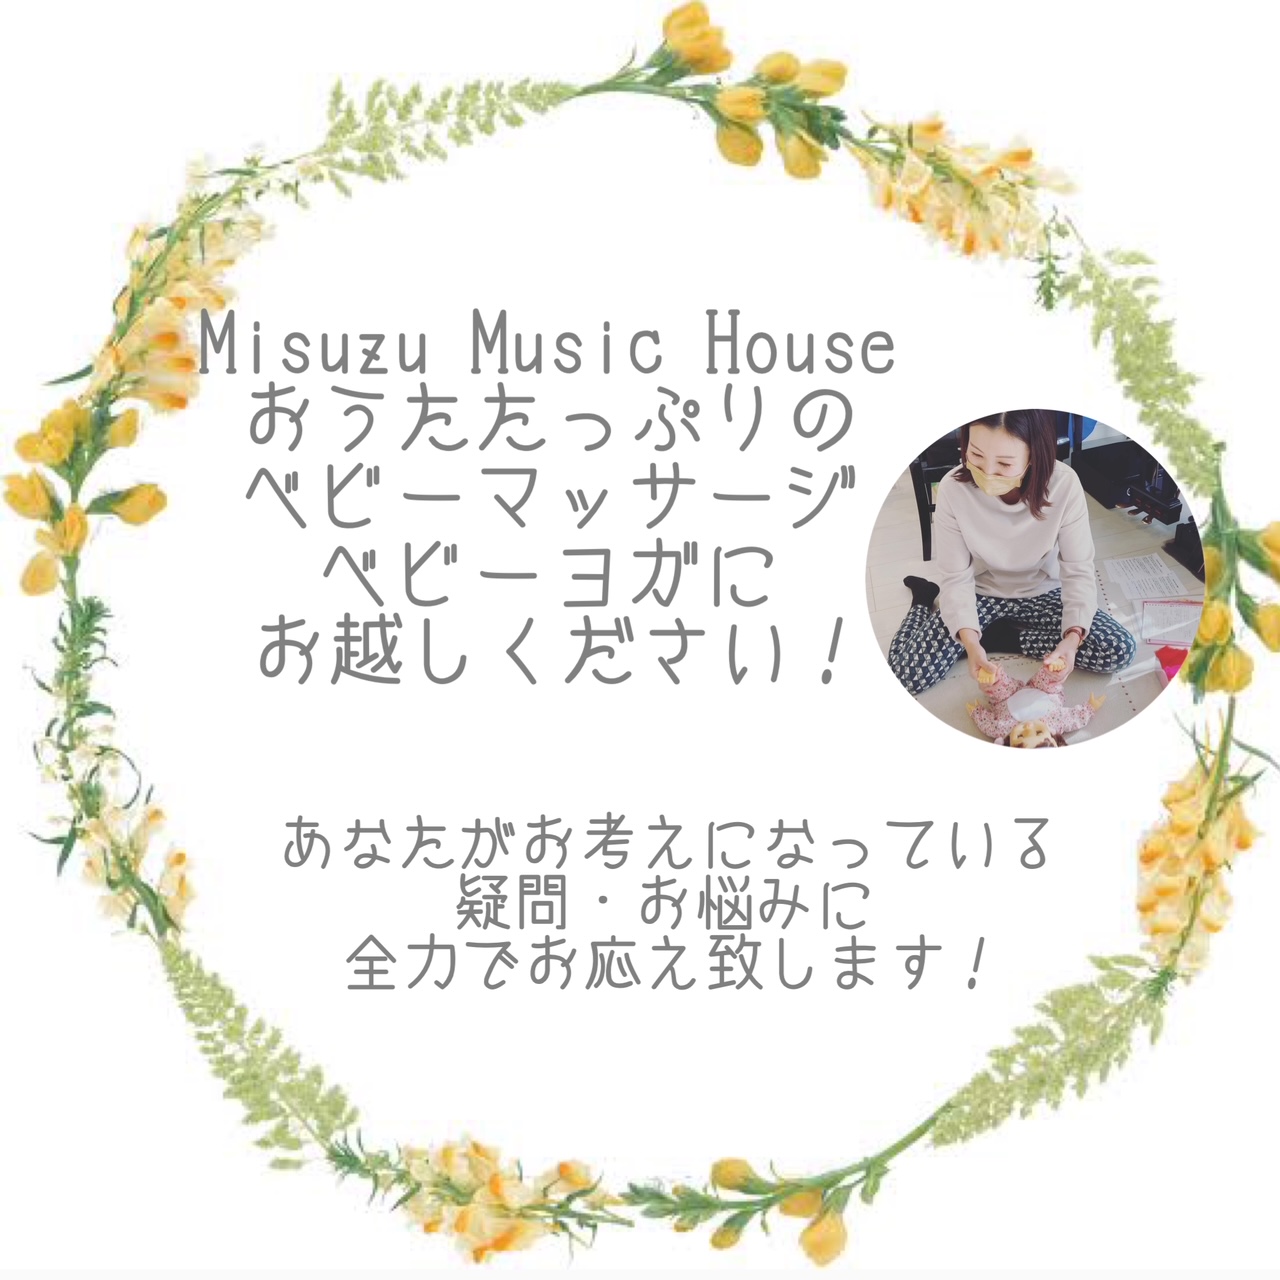 image105.jpeg alt="Misuzu Music Houseベビーマッサージご感想"